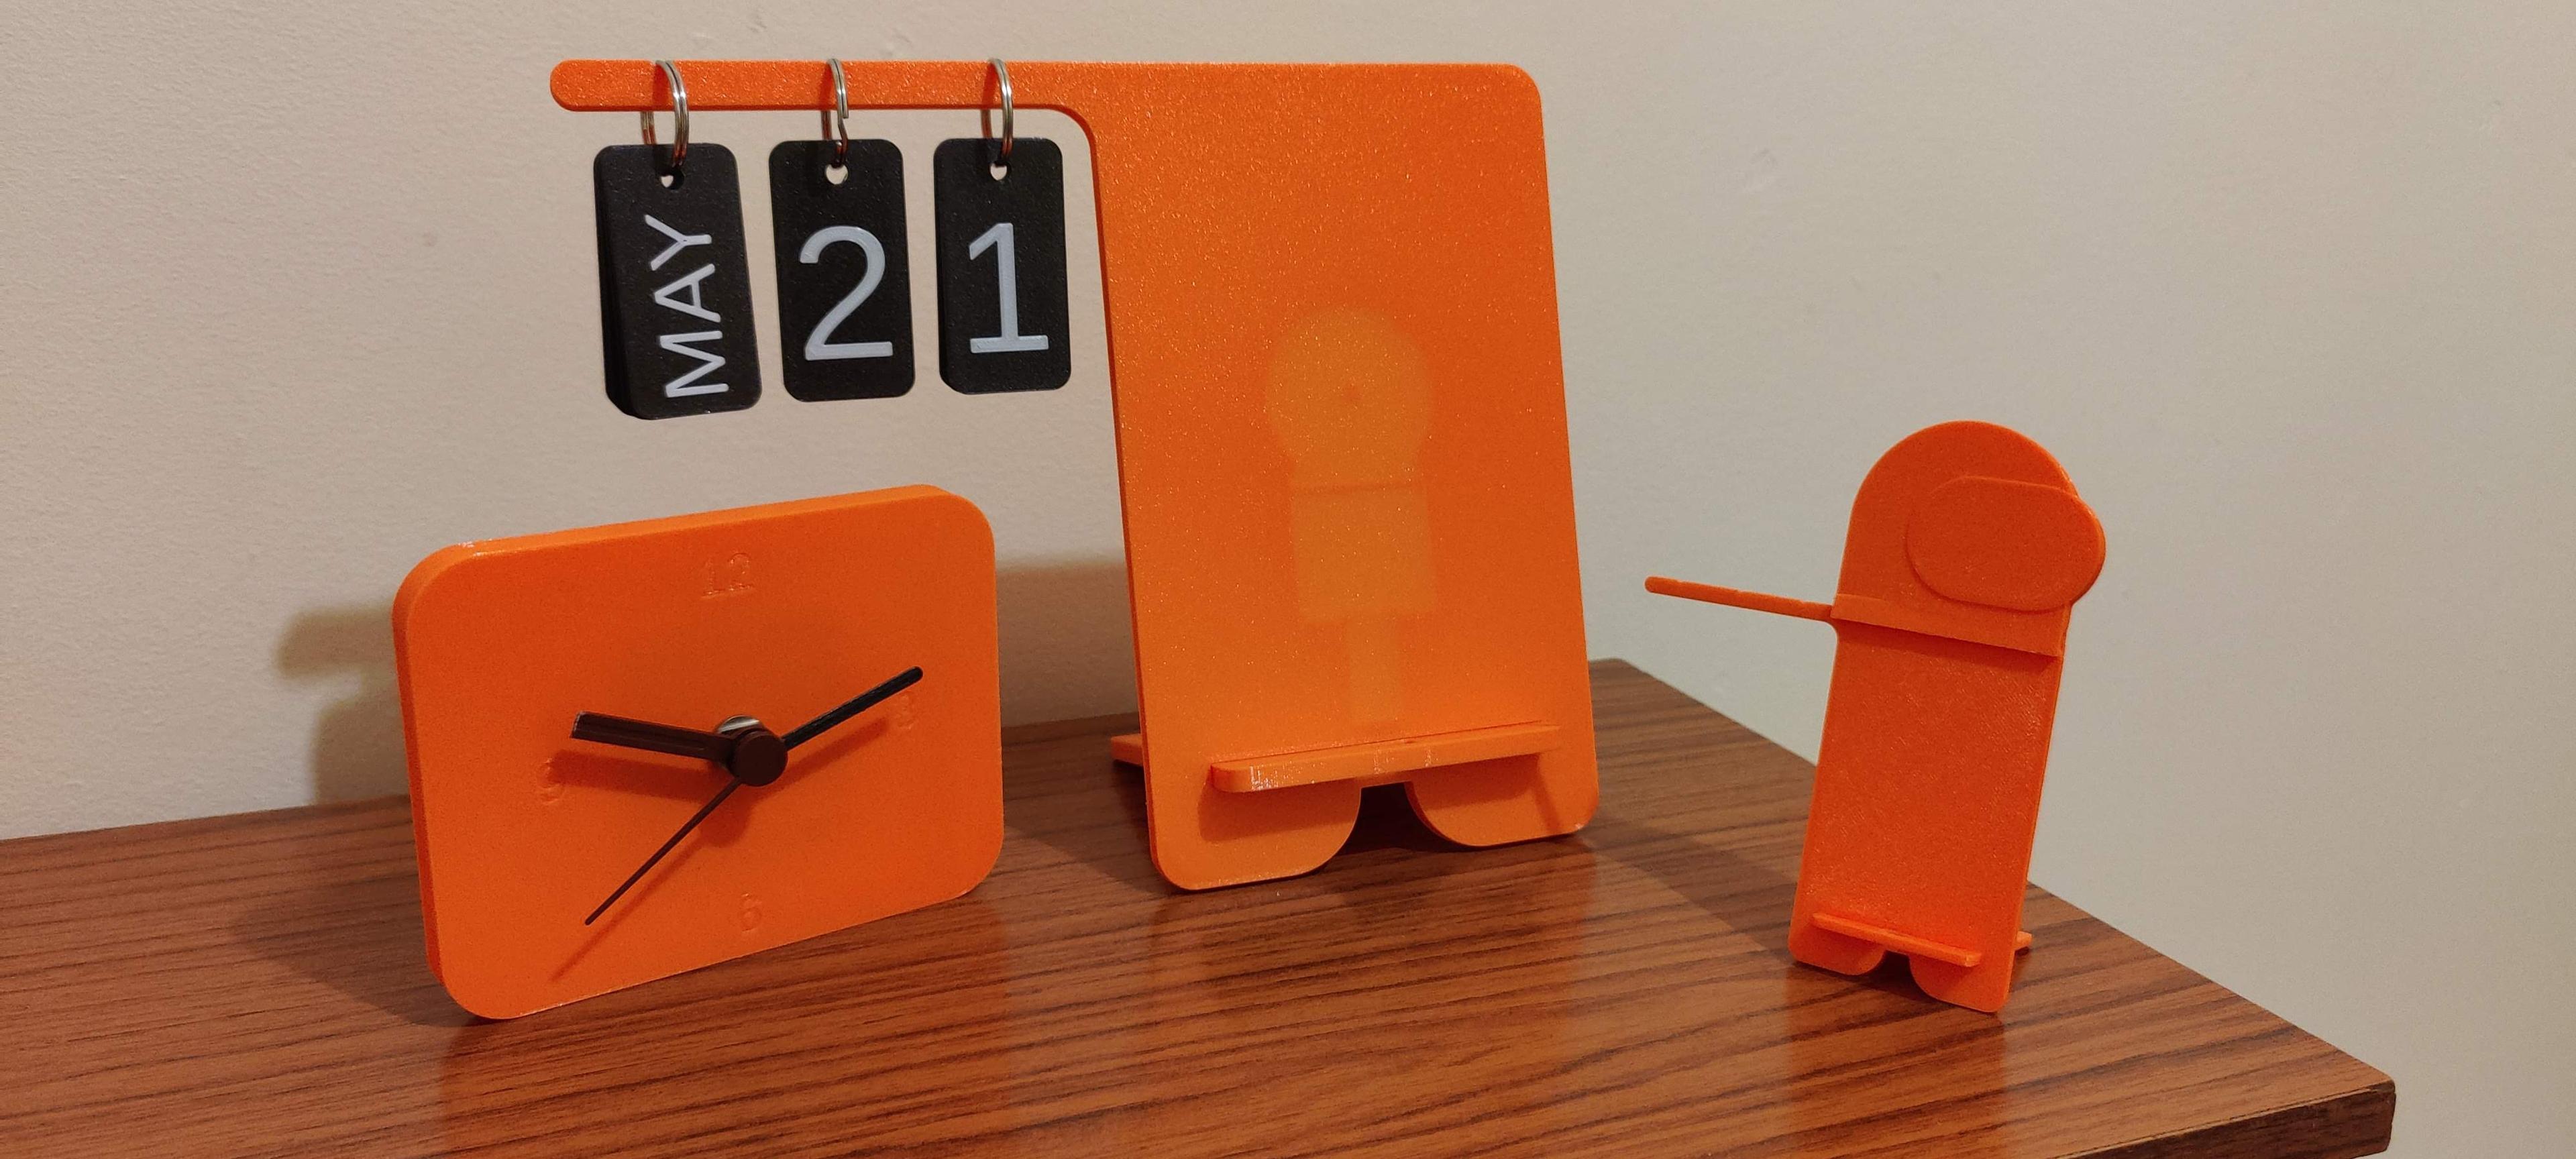 Customizable clock calendar with phone stand. 3d model